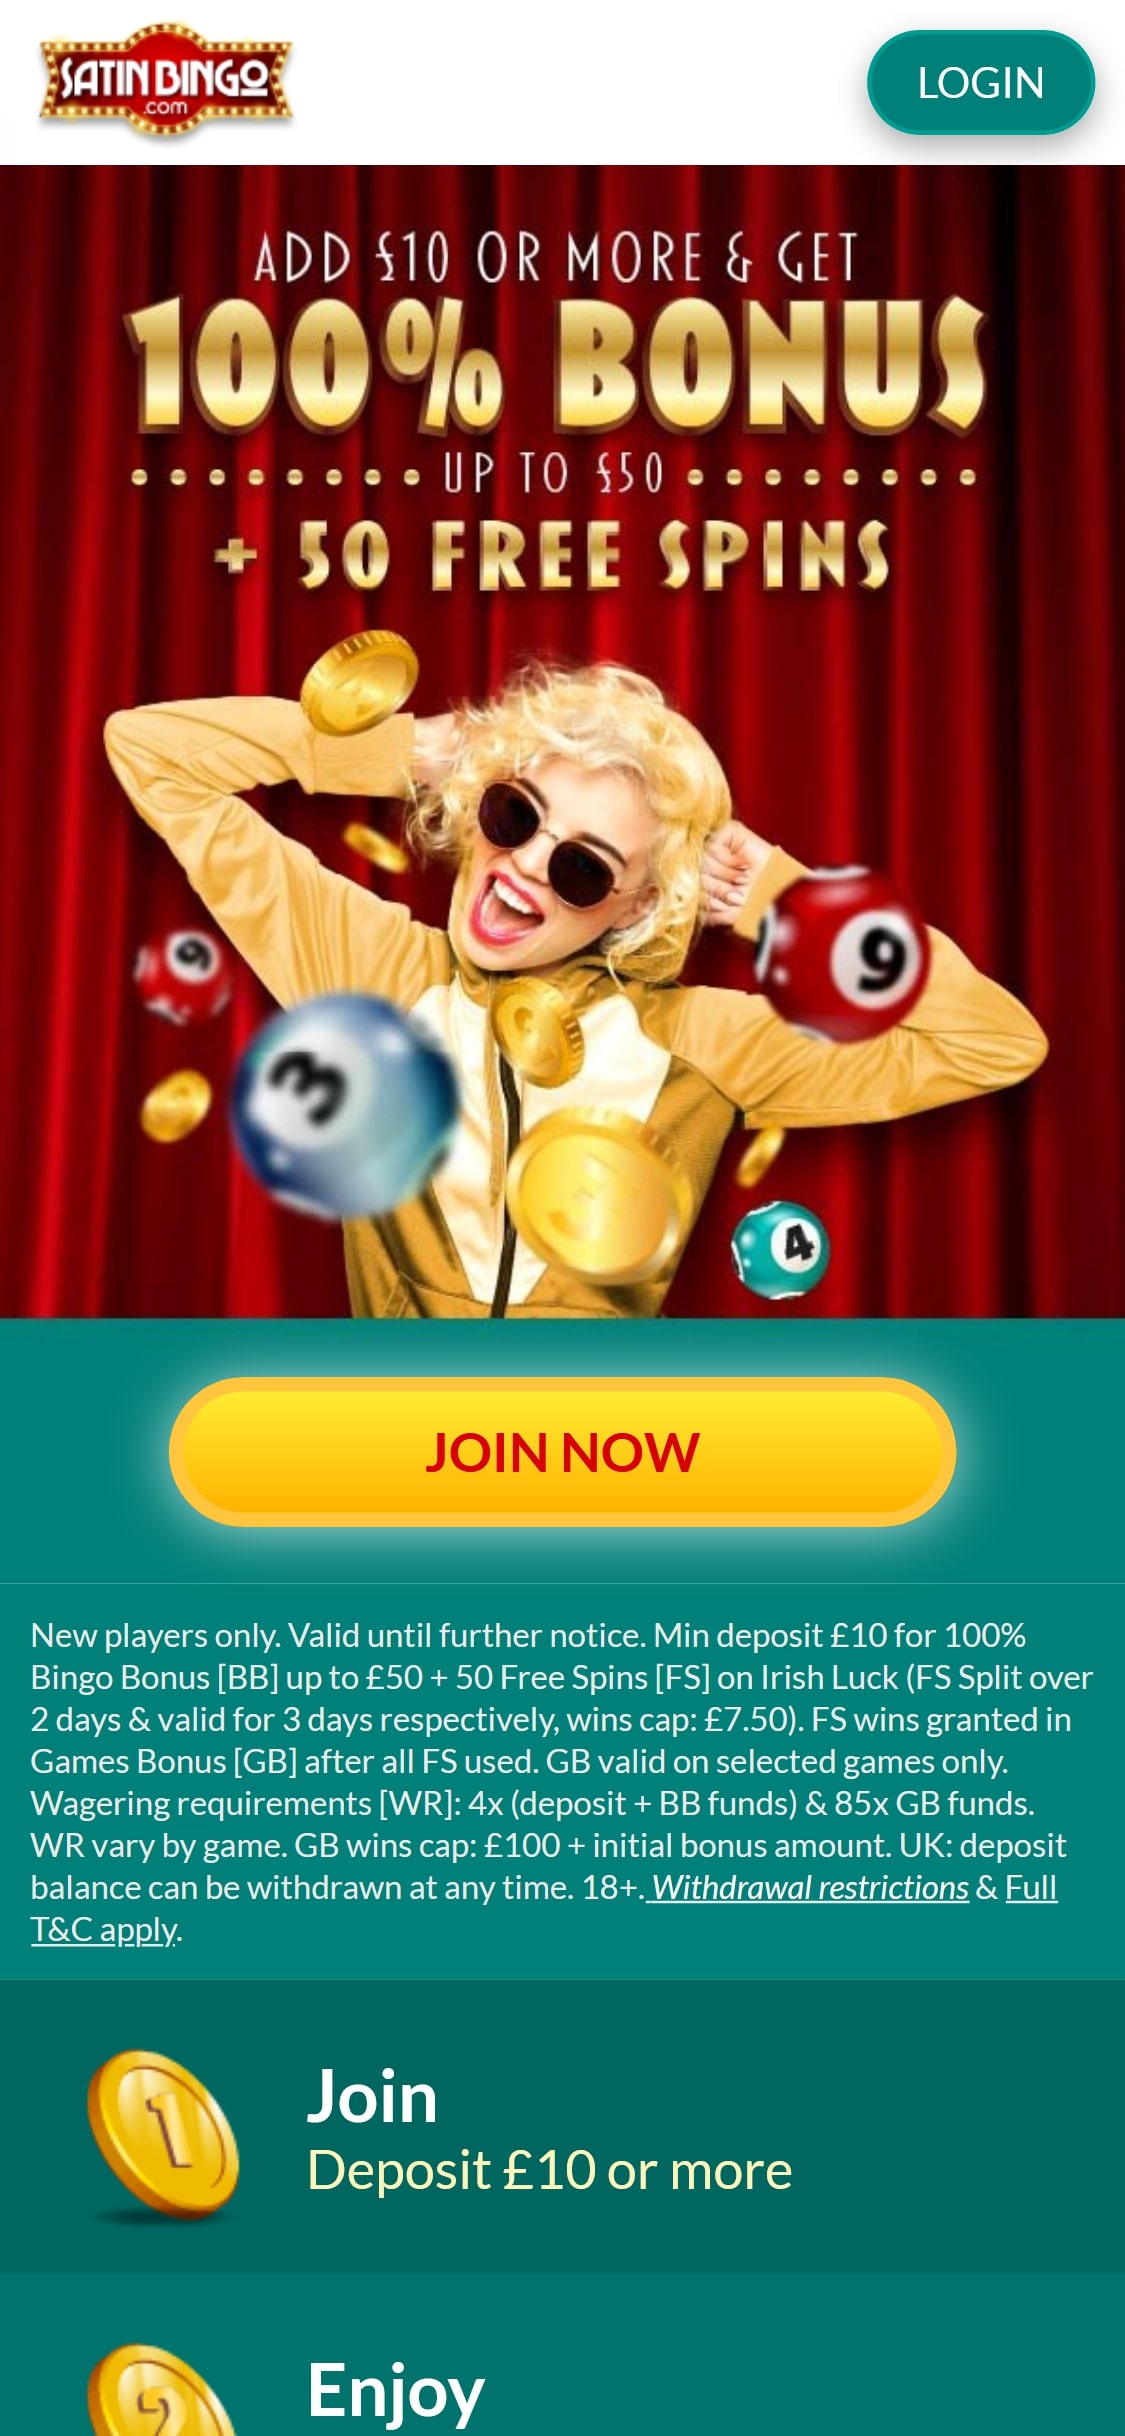 Satin Bingo Casino Mobile Review